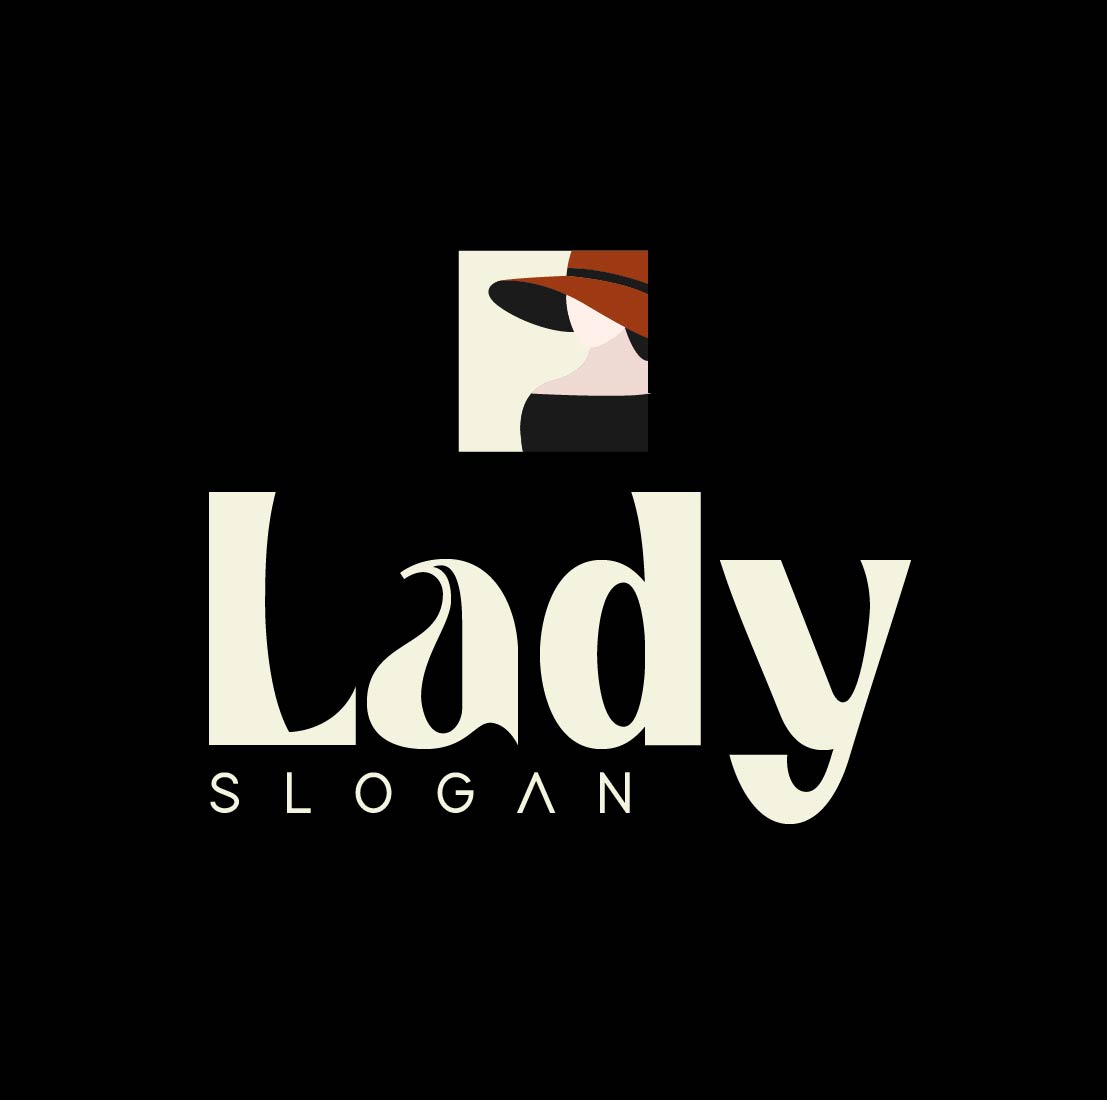 Lady slogan on a black background.